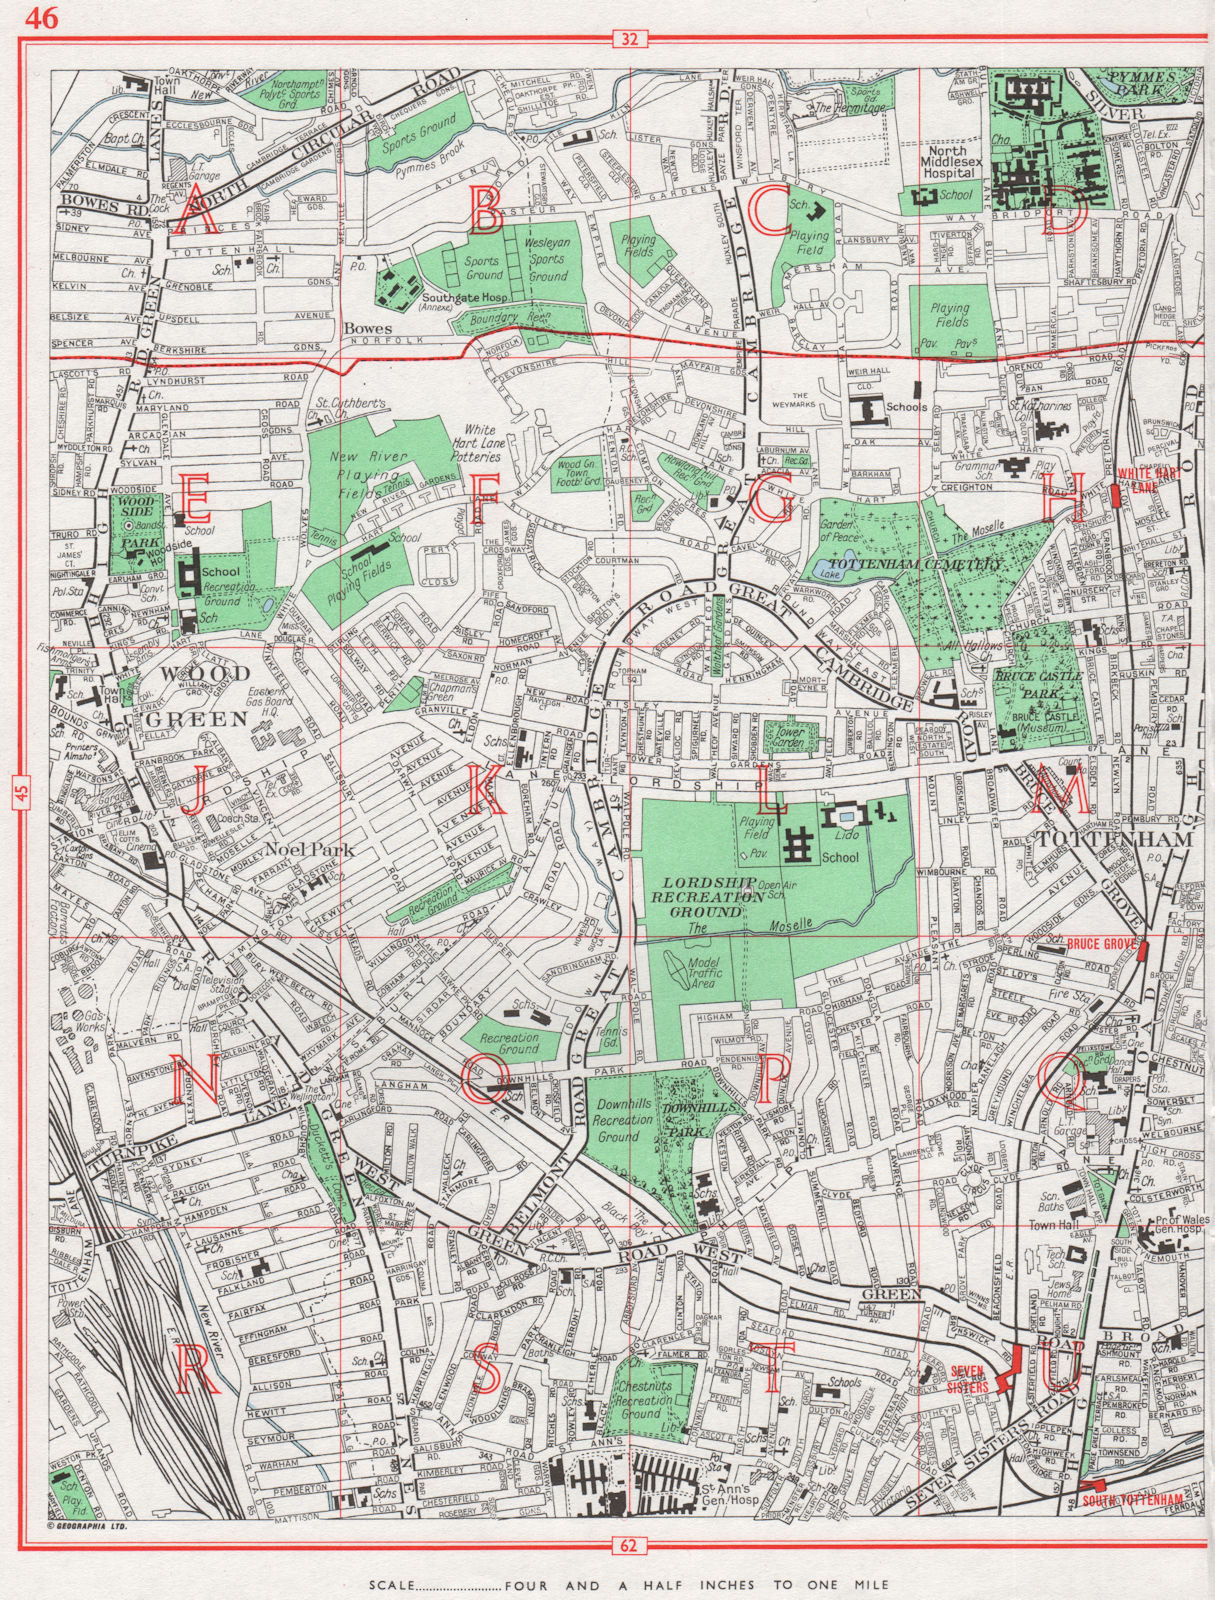 TOTTENHAM. Wood Green Noel Park Tower Gardens Haringey Bruce Grove 1964 map